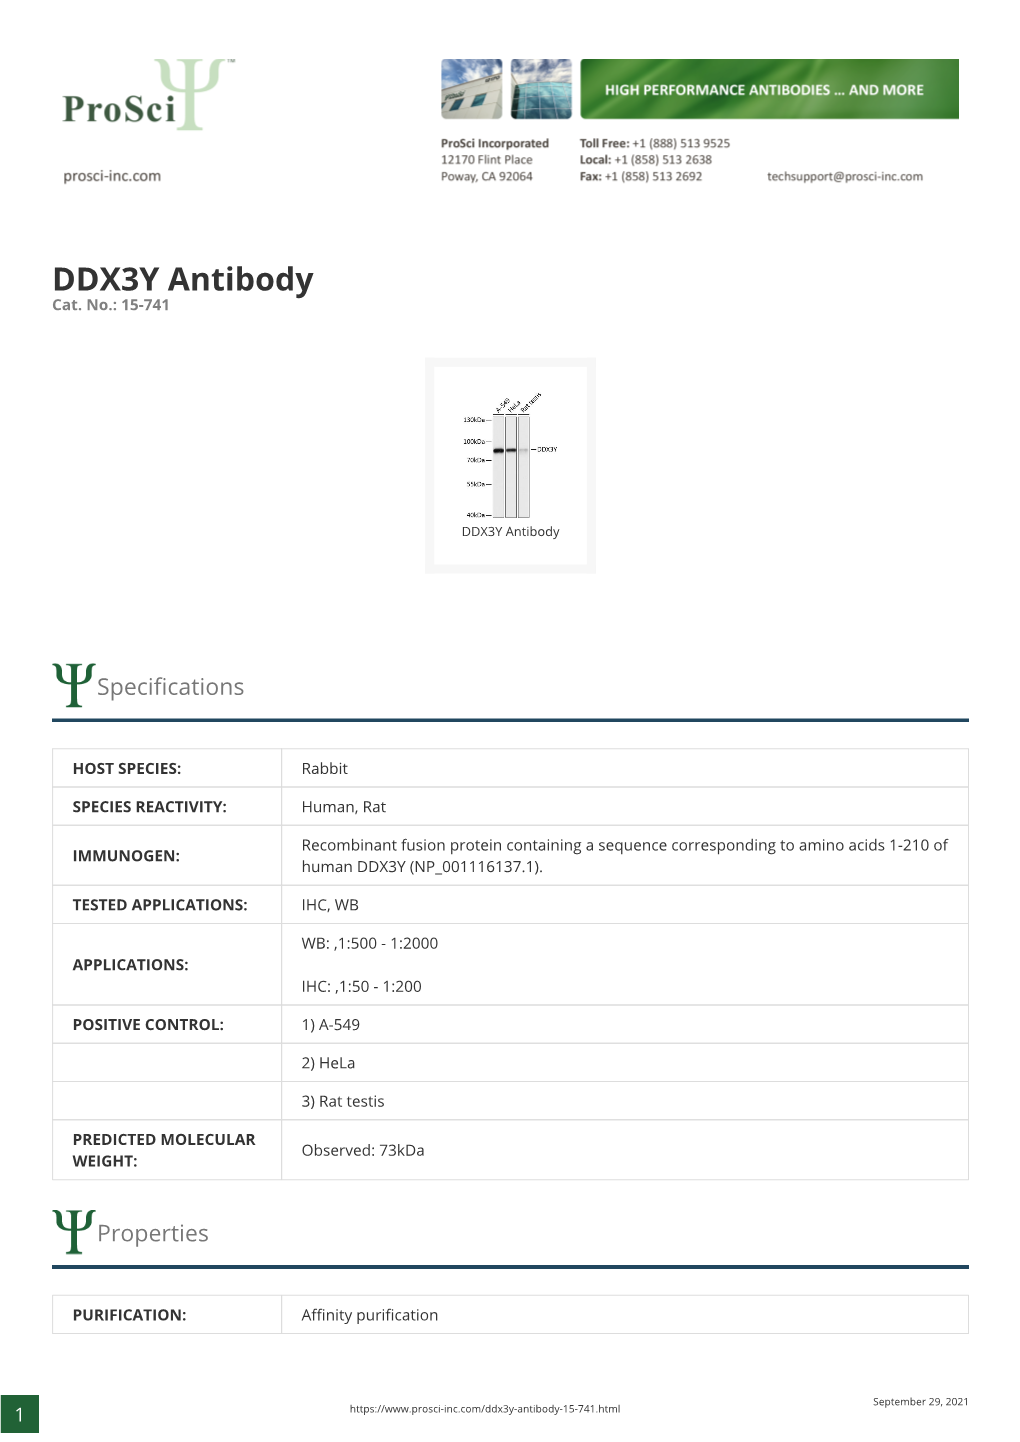 DDX3Y Antibody Cat